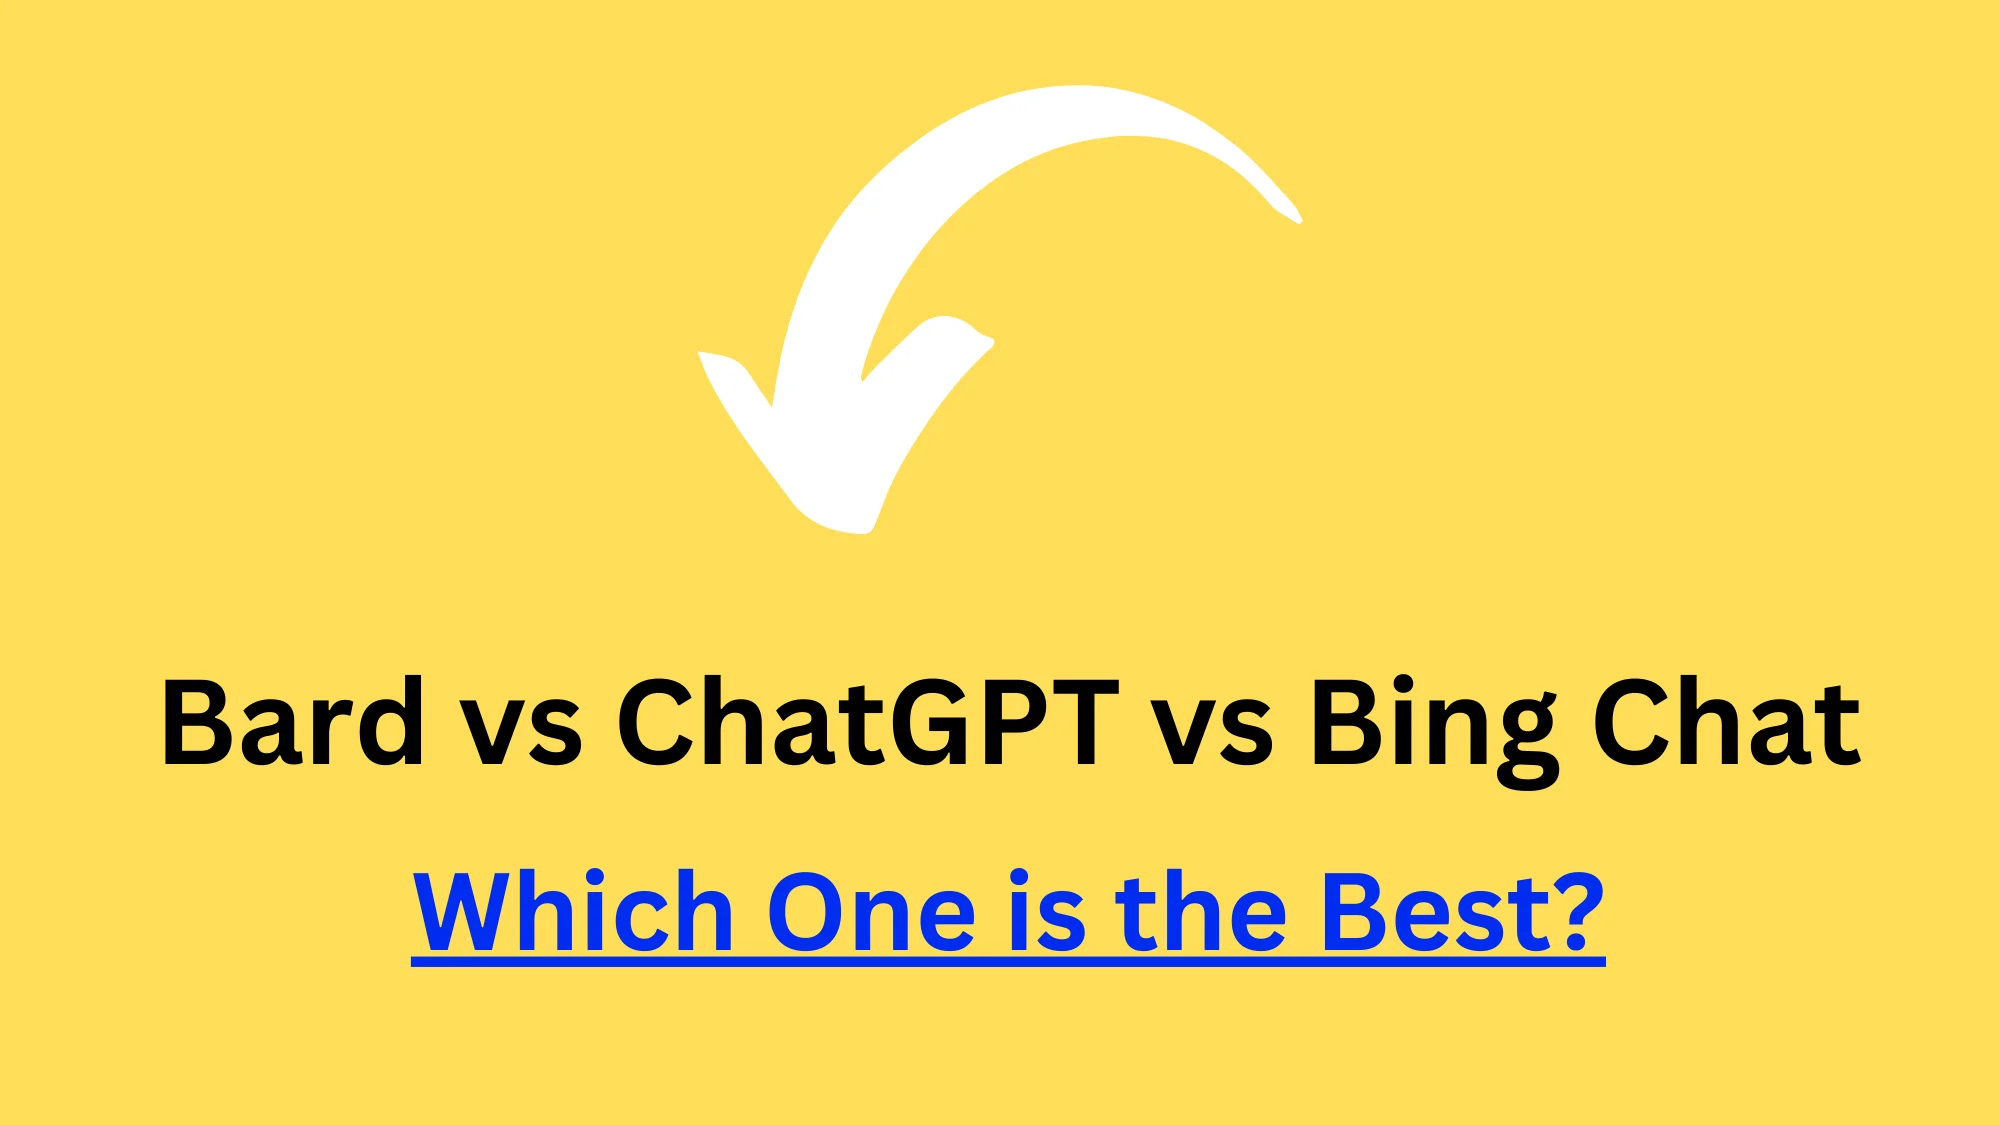 Bard vs Chat GPT vs Bing Chat